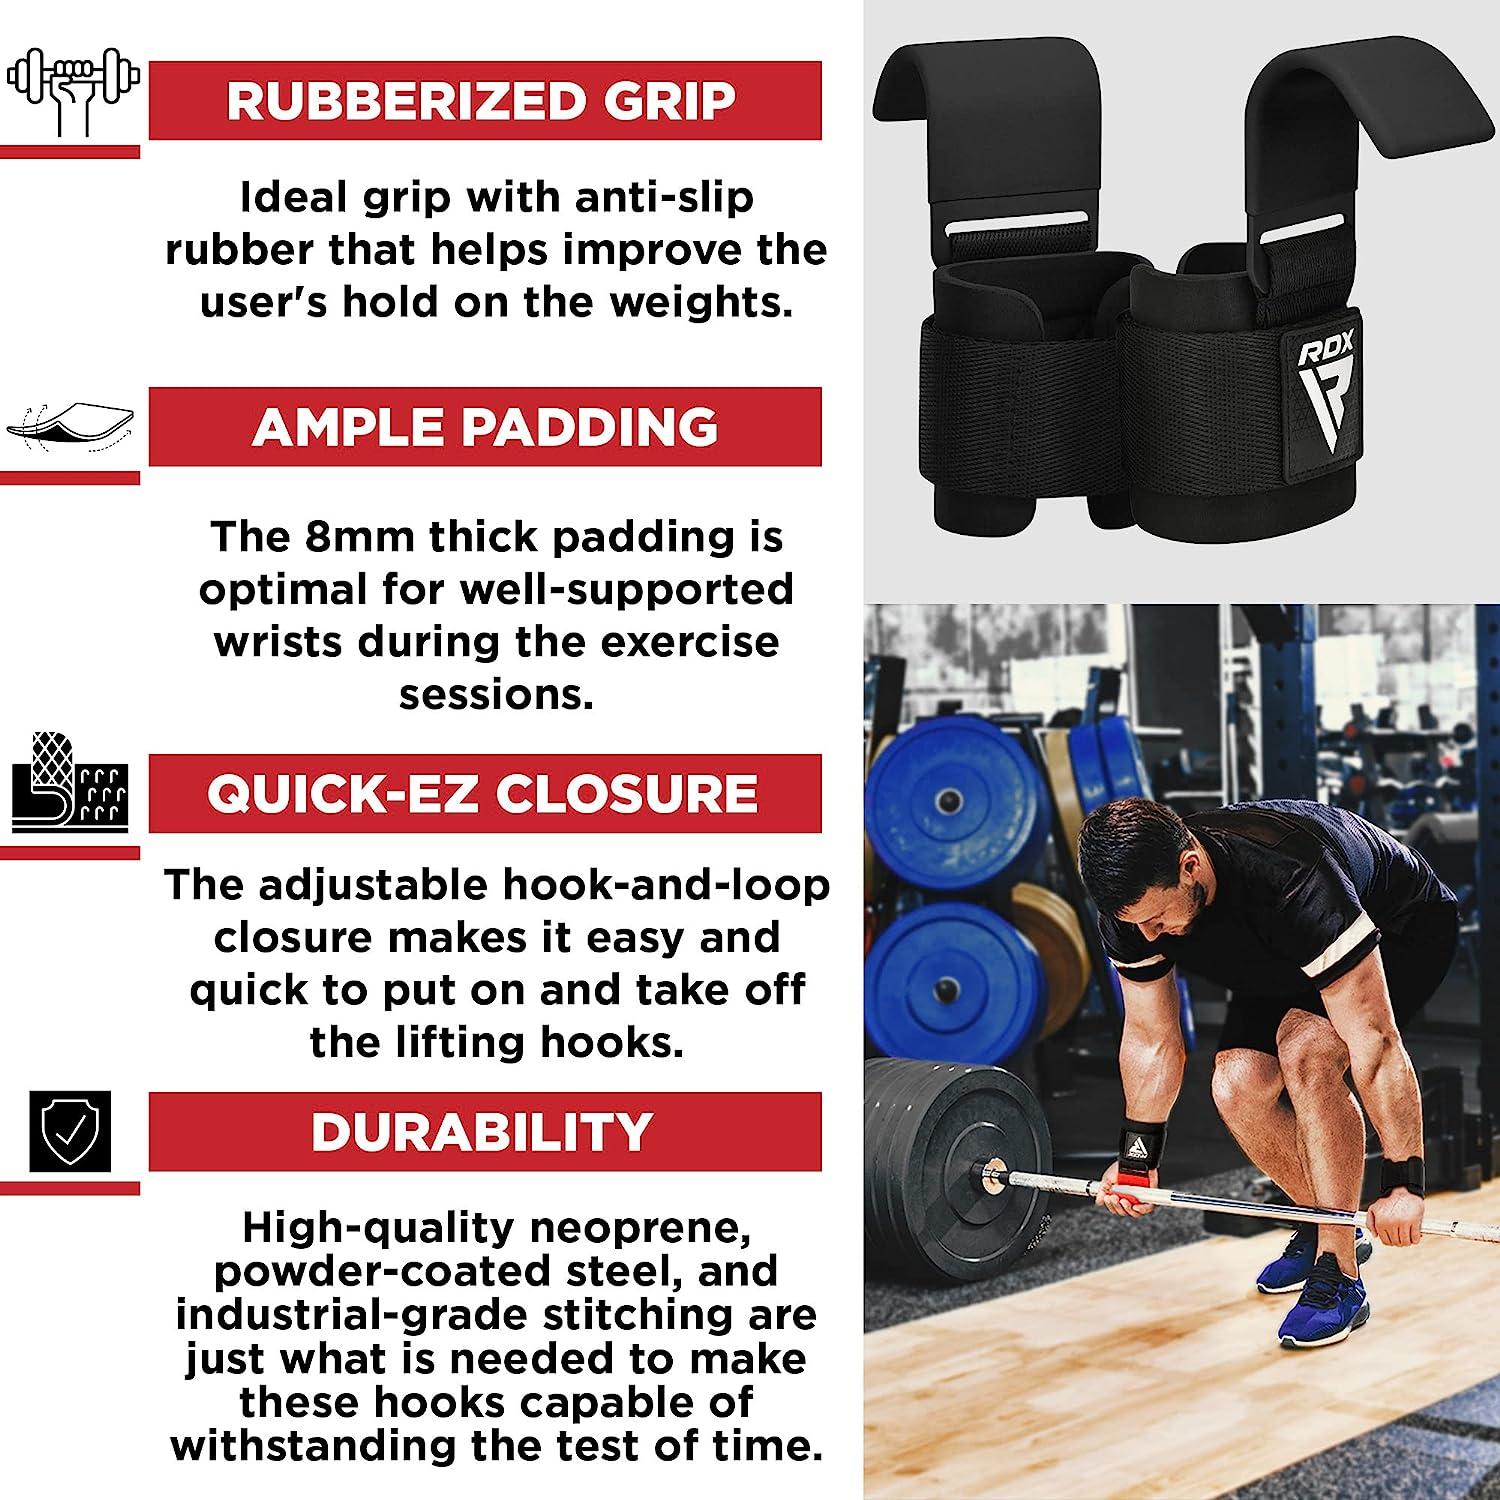 RDX Weight Lifting Hooks Straps Pair, Non-Slip Rubber Coated Grip, 7mm  Neoprene Padded Wrist Wrap Support Powerlifting Deadlift Pull Up Fitness Strength  Training, Gym Bodybuilding Workout, Men Women Black